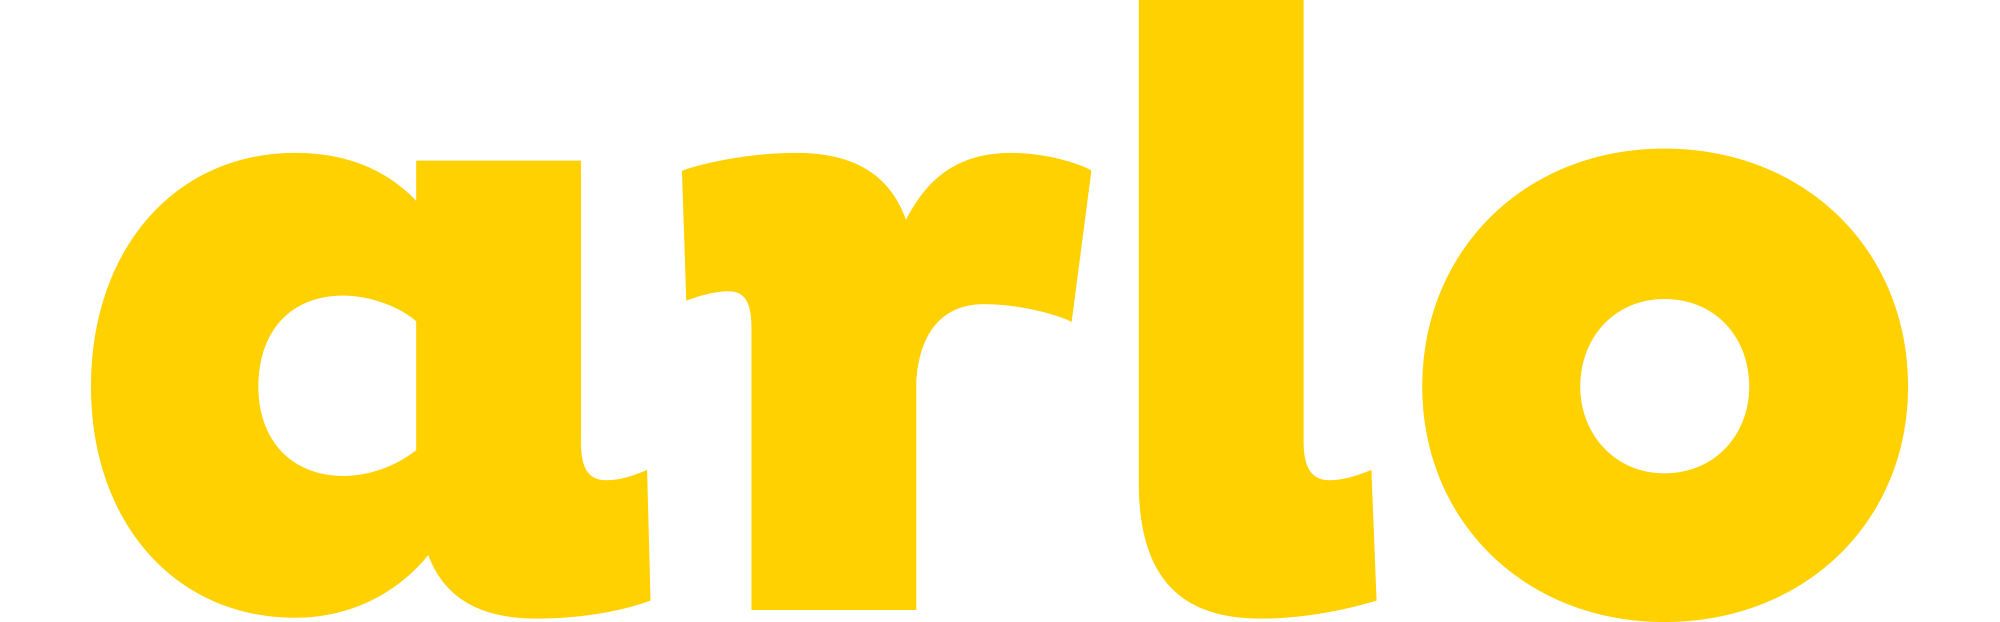 Arlo Logo - arlo-logo-yellow-letteronly-2000 - Arlo Blog